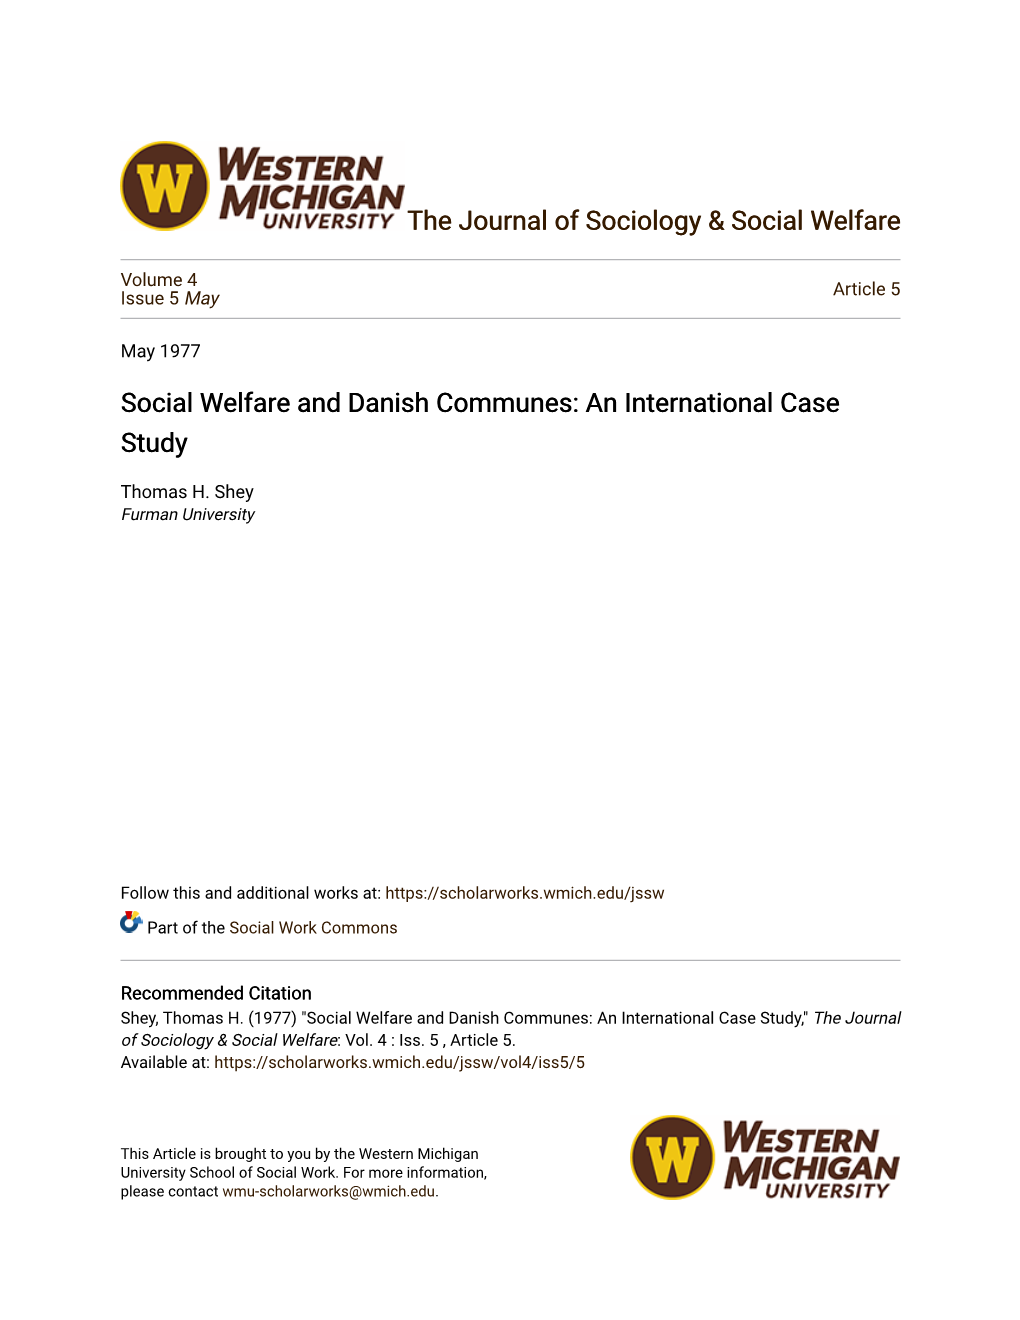 Social Welfare and Danish Communes: an International Case Study